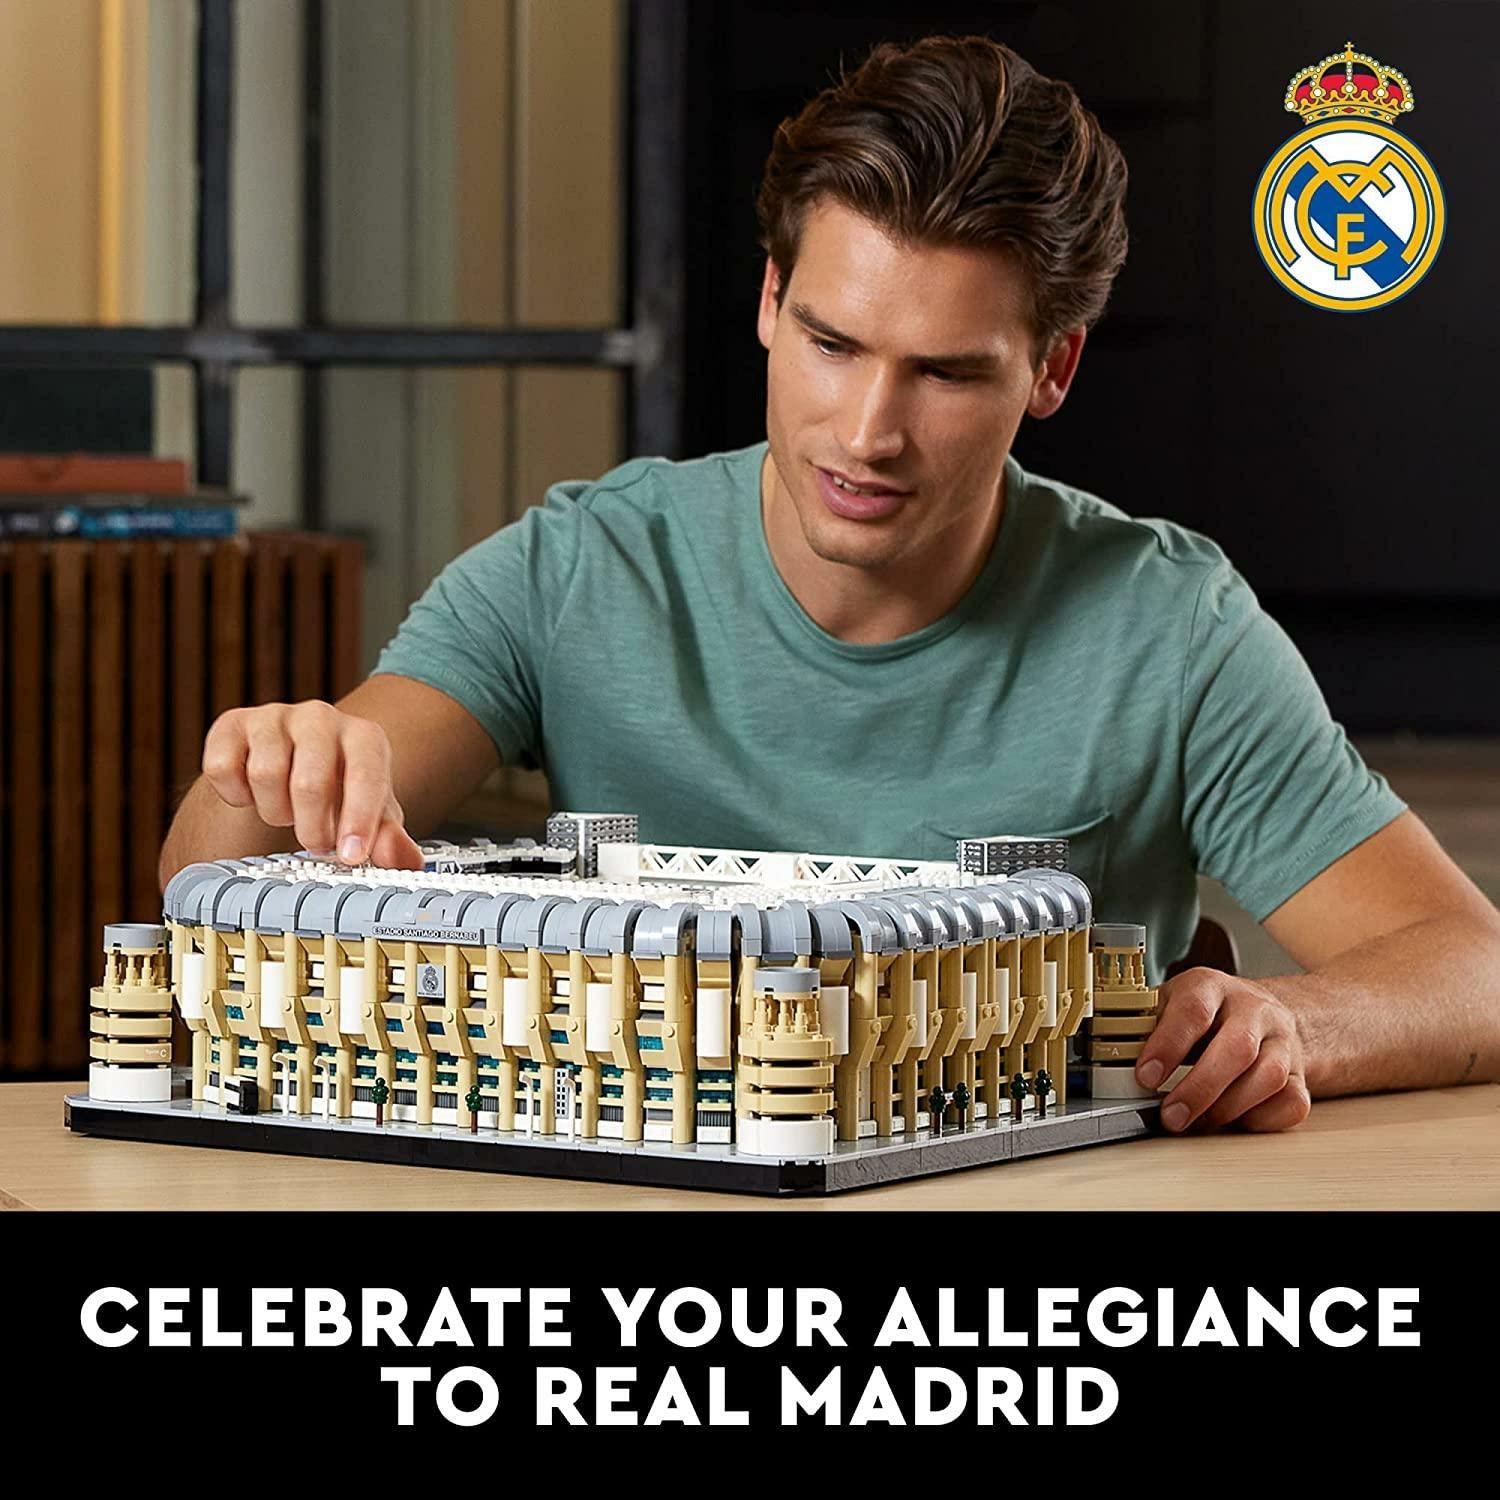 LEGO Real Madrid – Santiago Bernabéu Stadium 10299 Set Build A Detailed Model 5876 Pieces - BumbleToys - 18+, Architecture, Boys, LEGO, OXE, Pre-Order